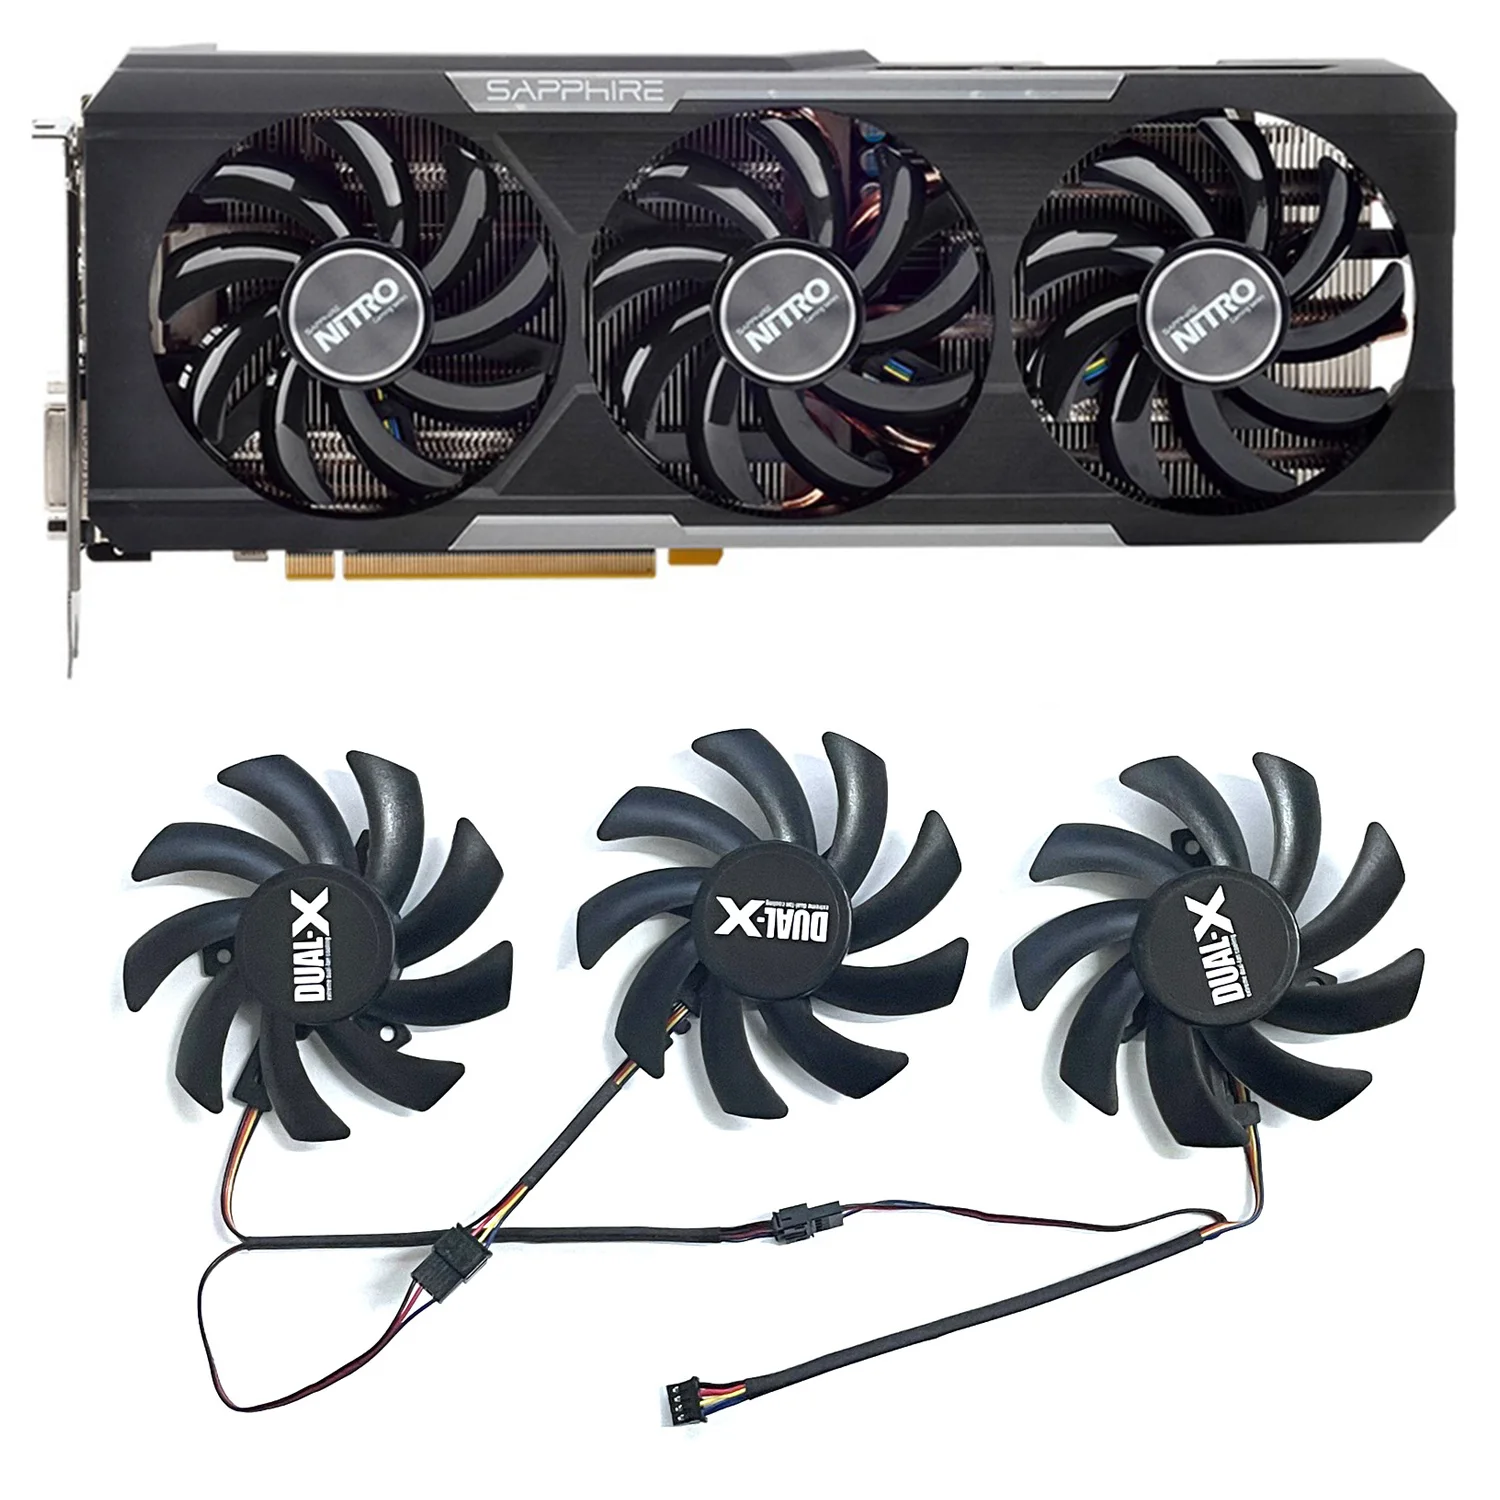 

3pcs New FDC10H12D9-C 85mm 4pin 0.35A GPU Cooling Fan for Sapphire Radeon Nitro R9 280X 290 290X 390 390X Tri-X Graphics Cards